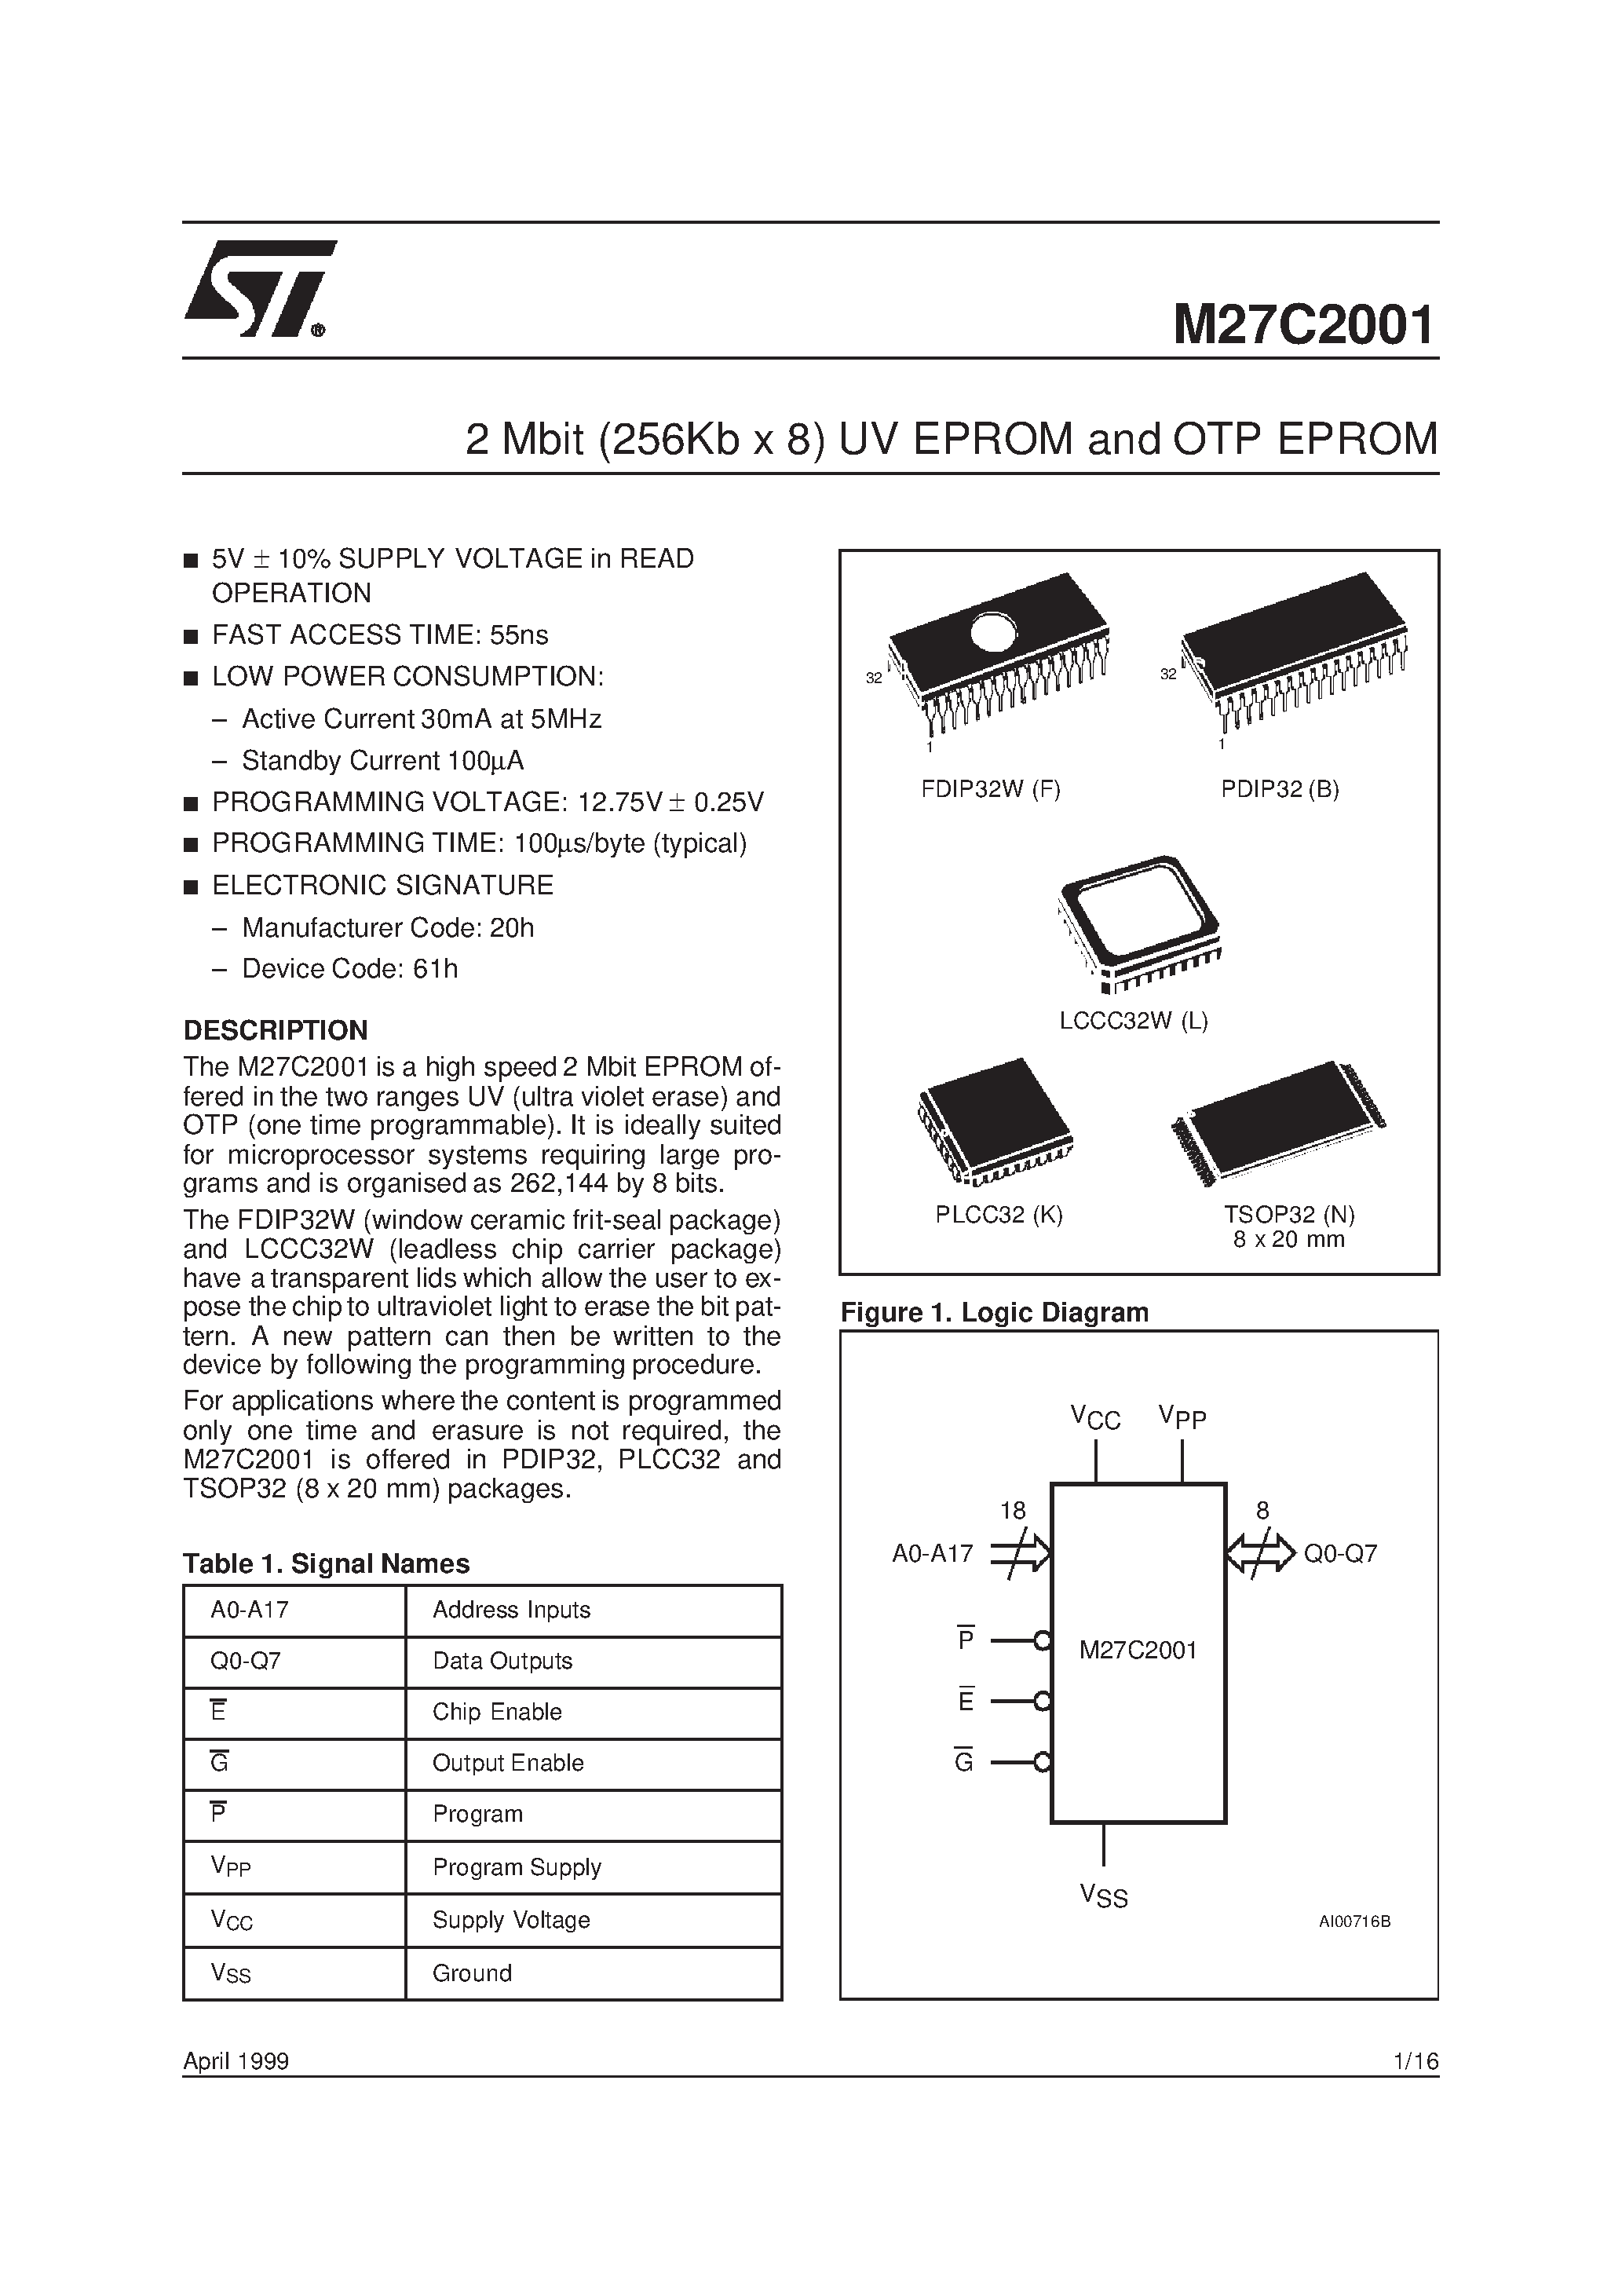 Datasheet M27C2001-10F1TR - 2 Mbit 256Kb x 8 UV EPROM and OTP EPROM page 1